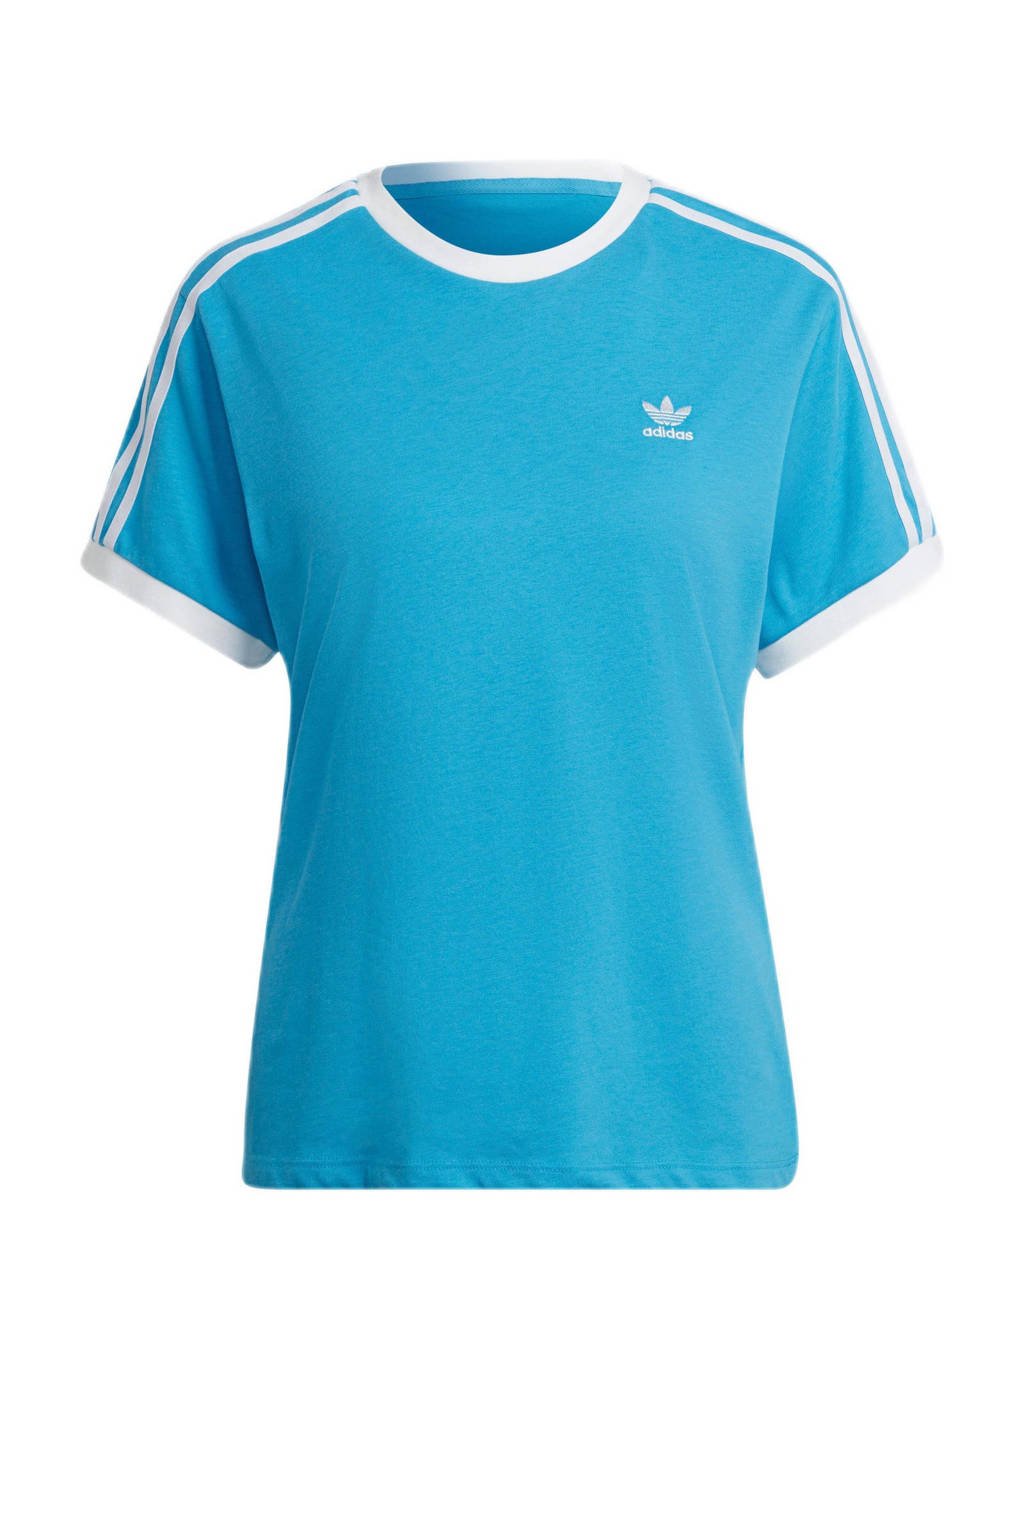 adidas Originals T-shirt blauw